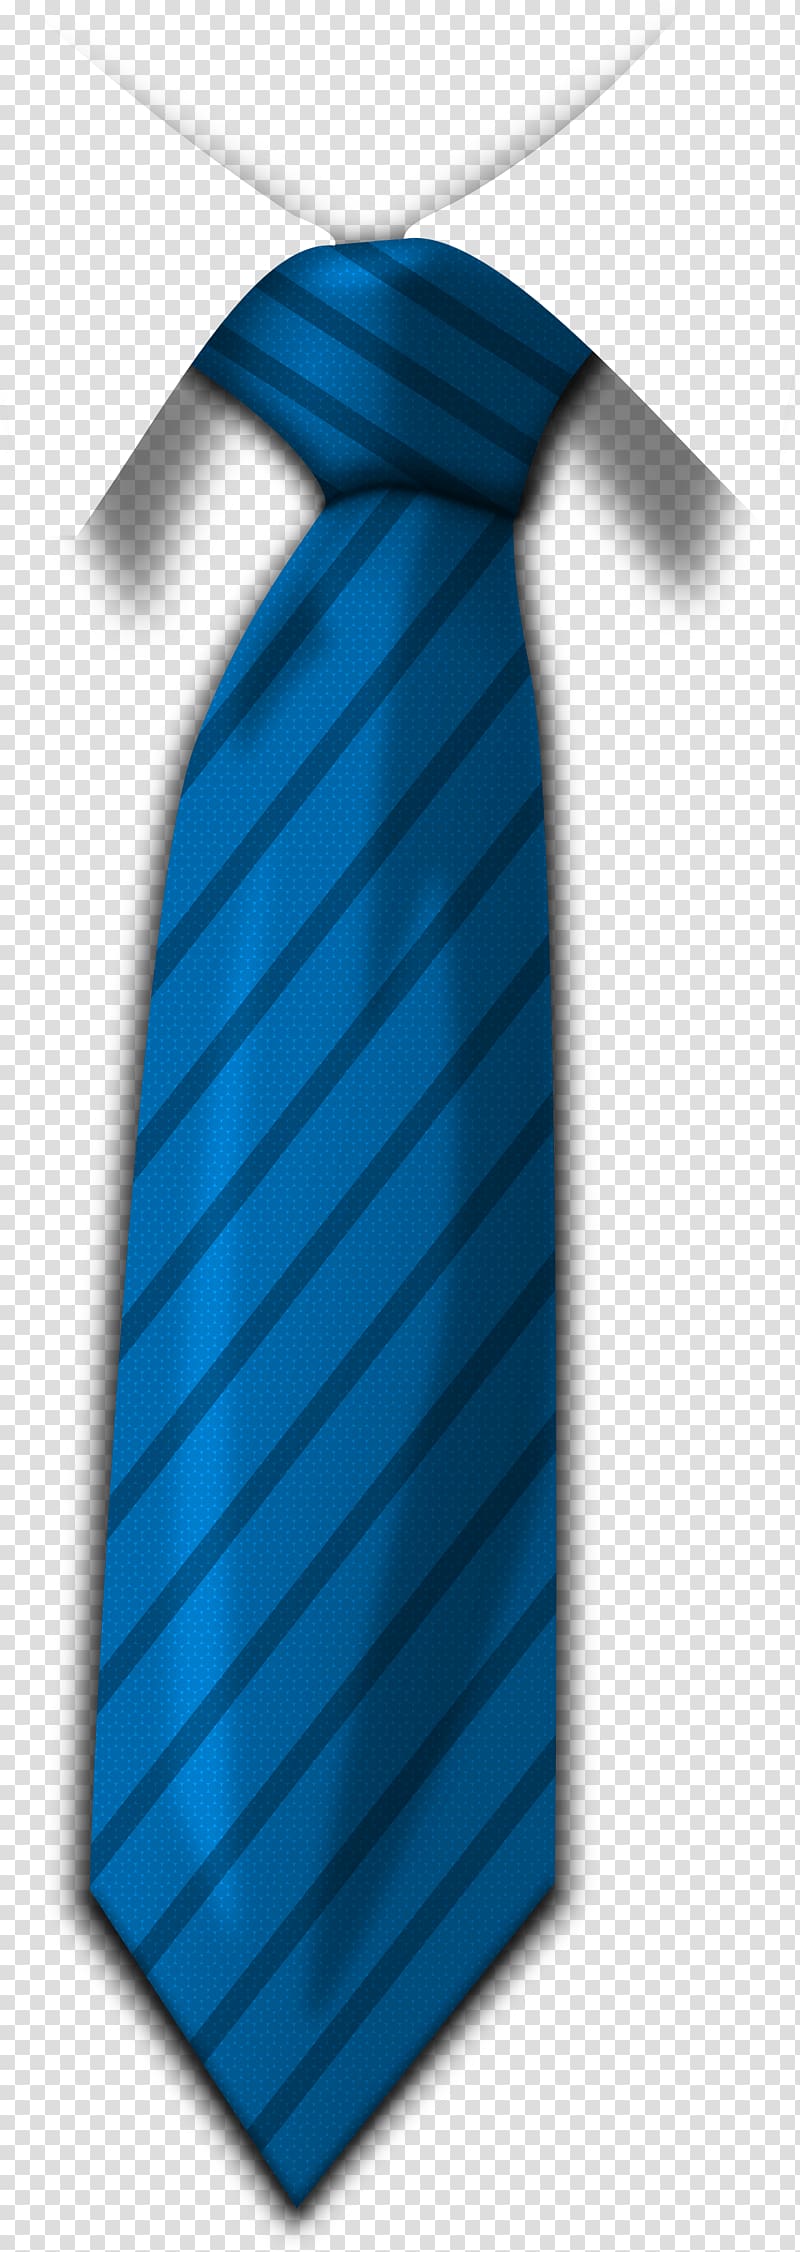 Картинка галстук без фона